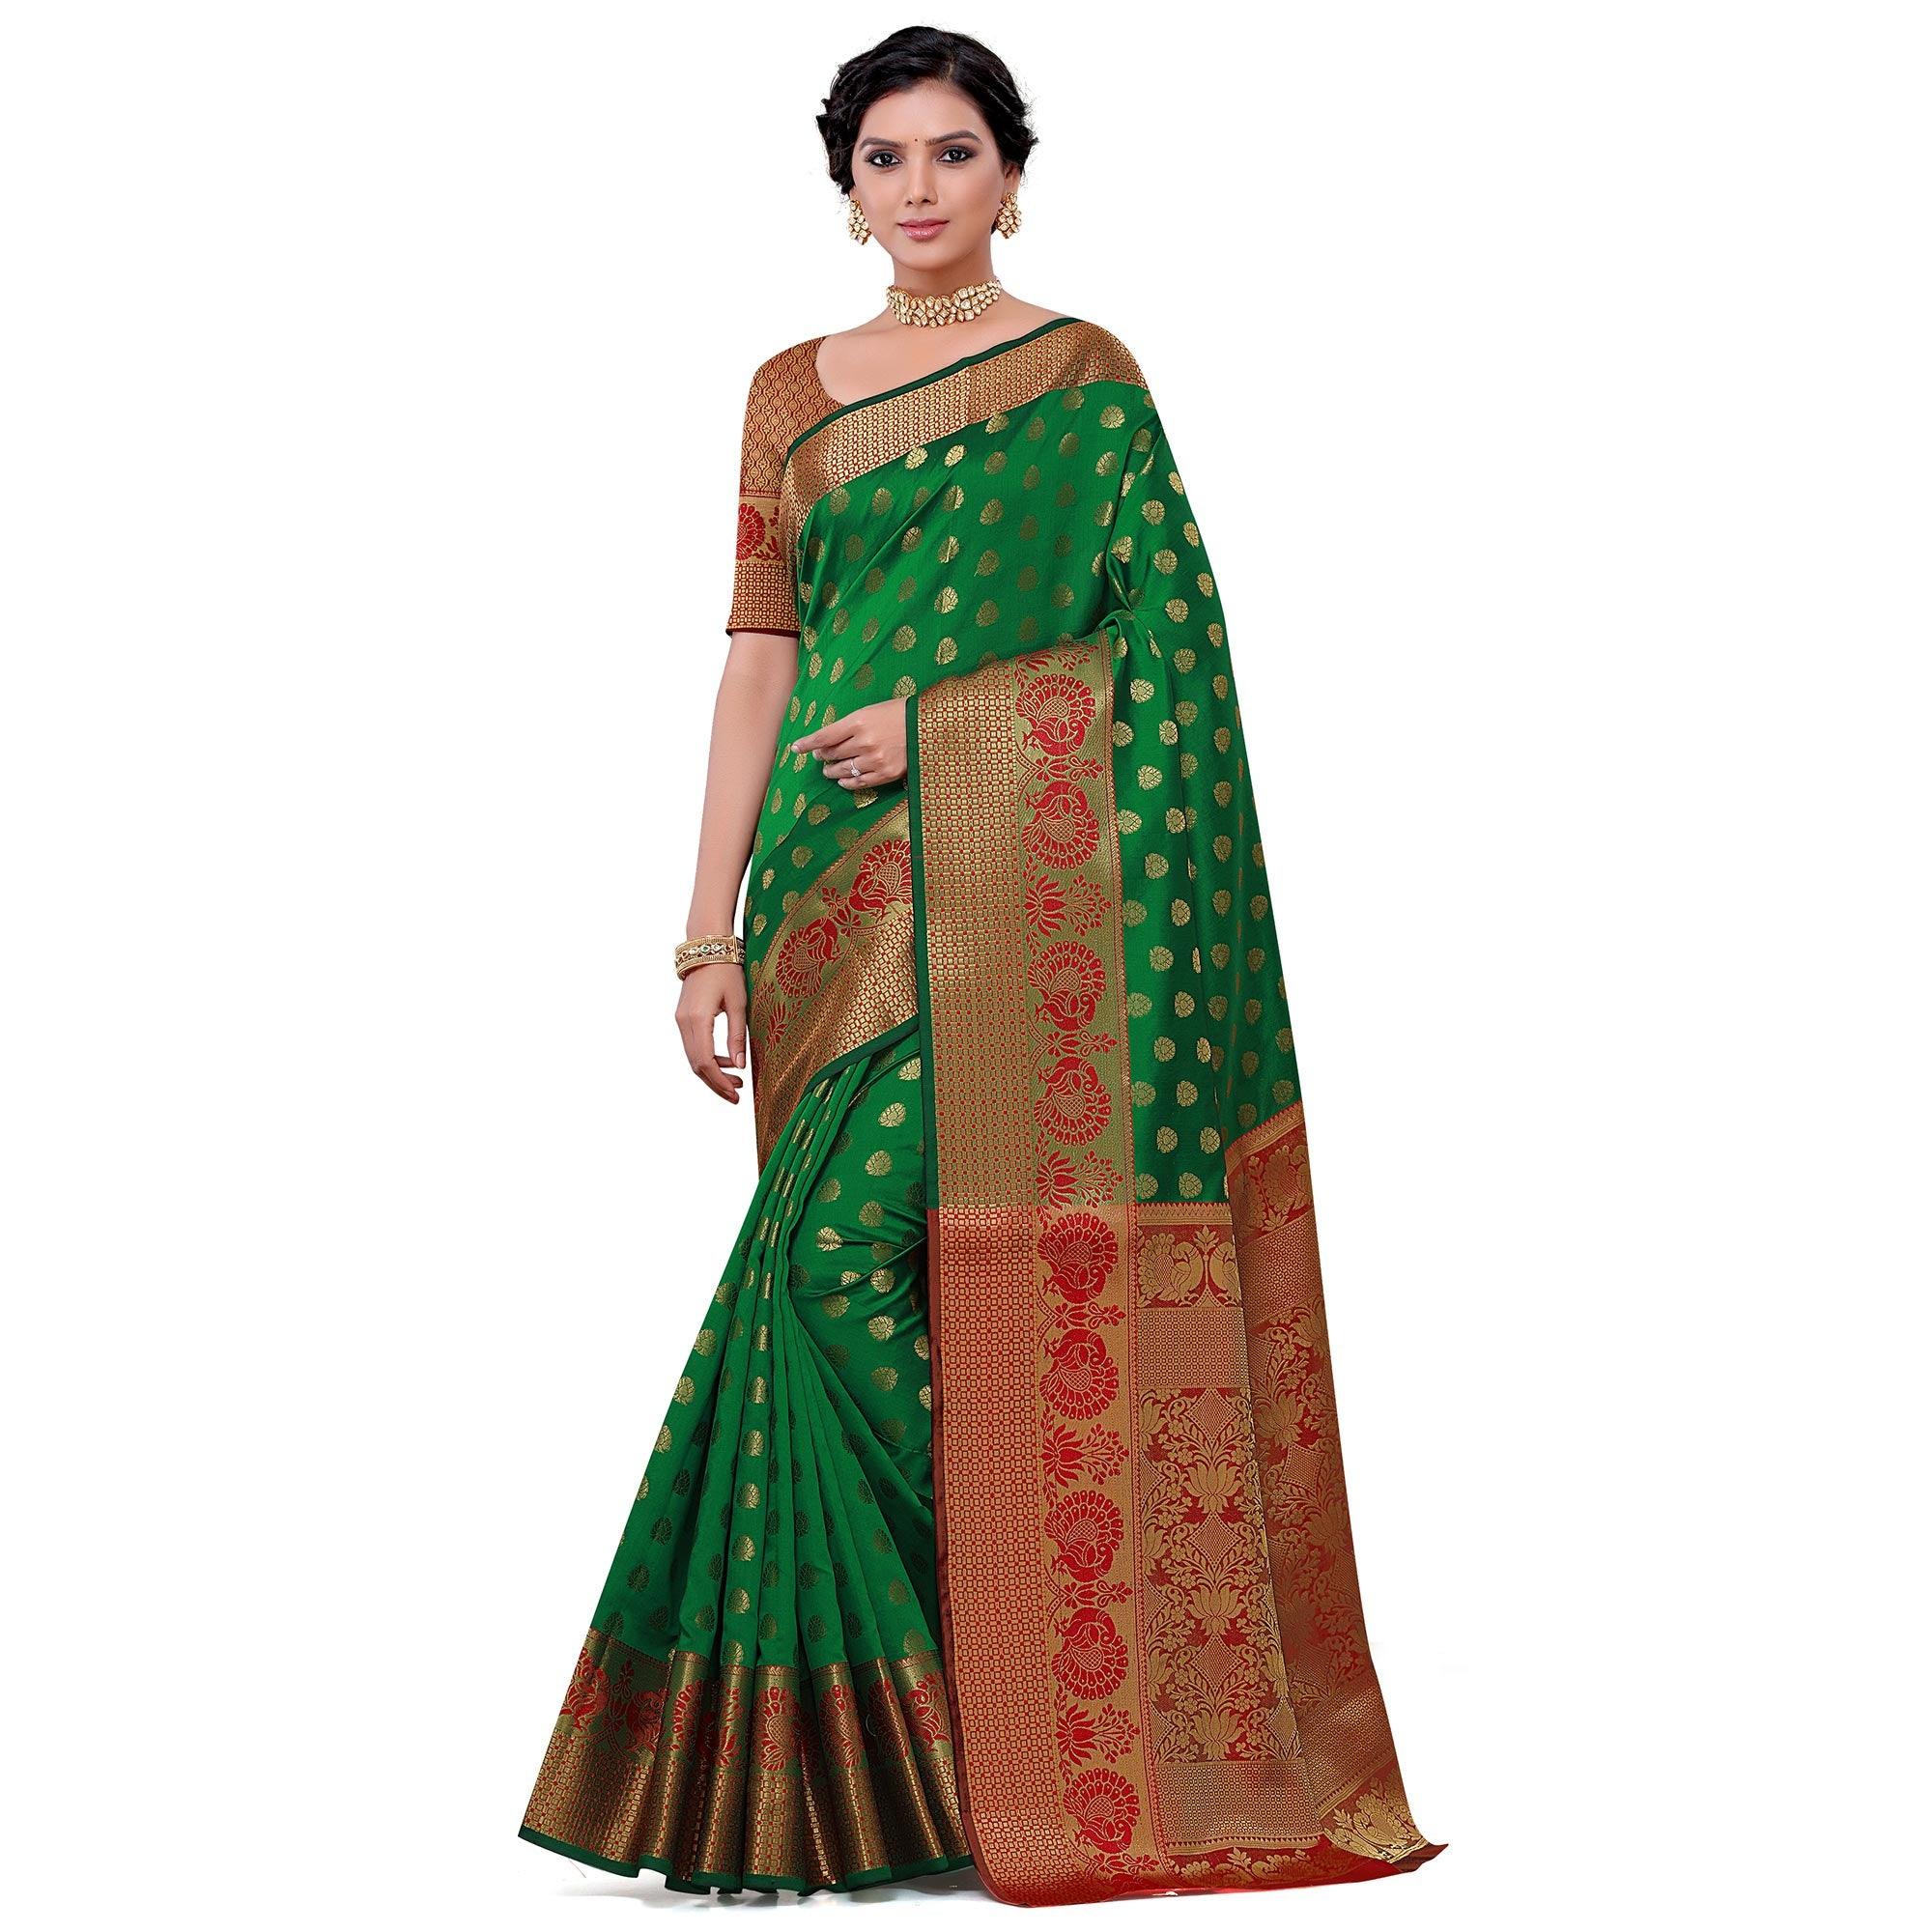 Intricate Dark Green Colored Festive Wear Woven Kota Art Silk Banarasi Saree - Peachmode